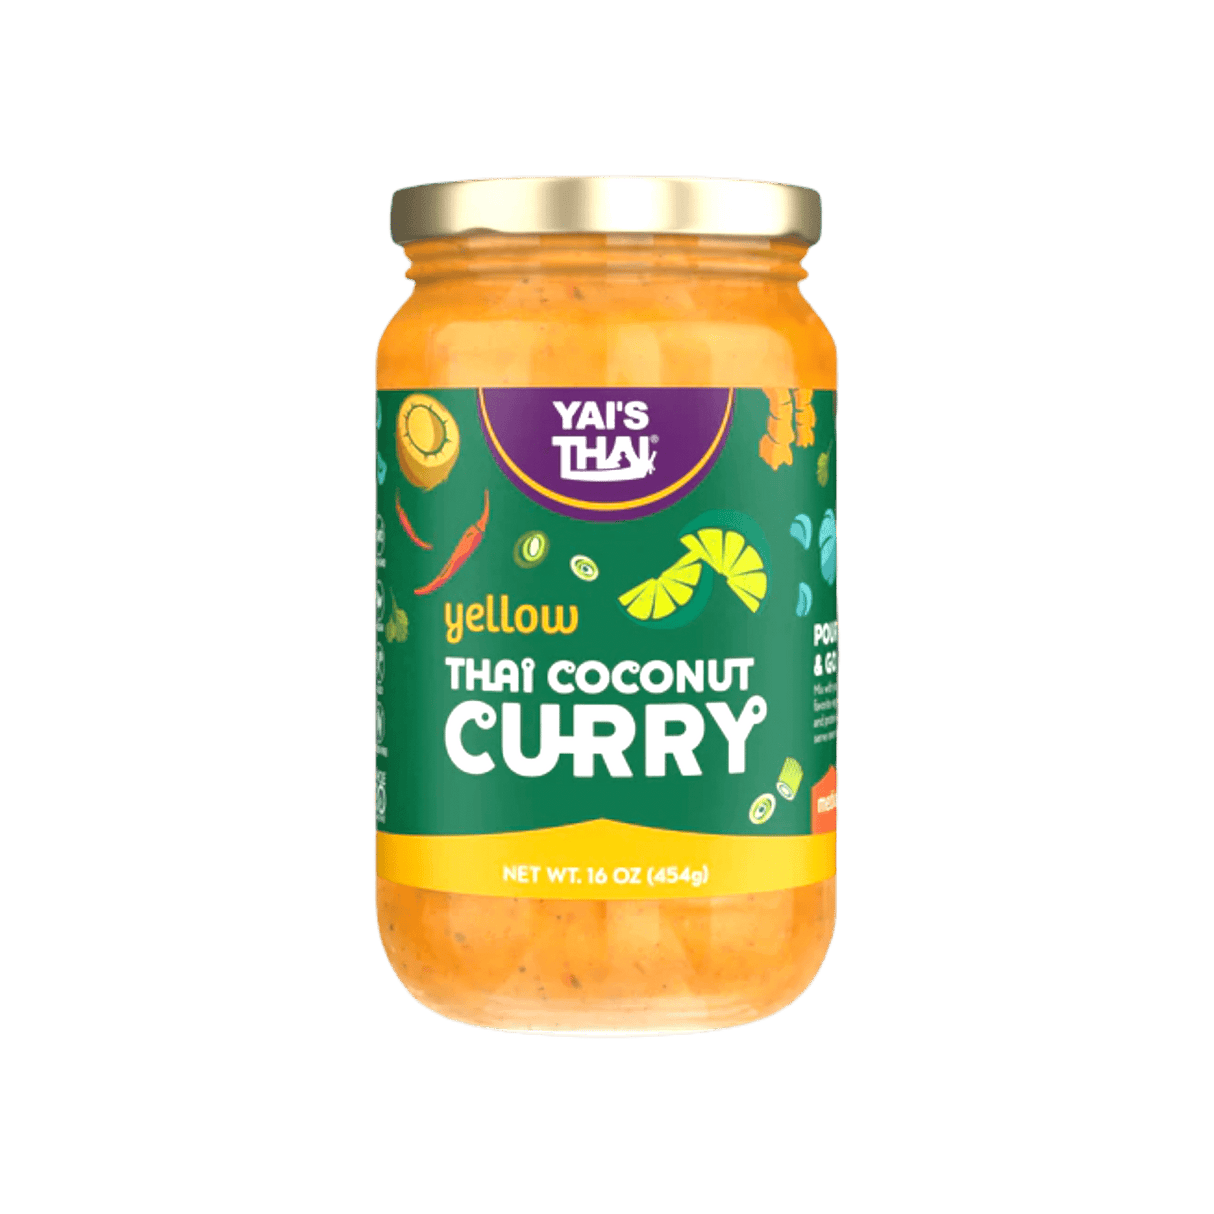 Yai's Thai Thai Coconut Curry - Yellow